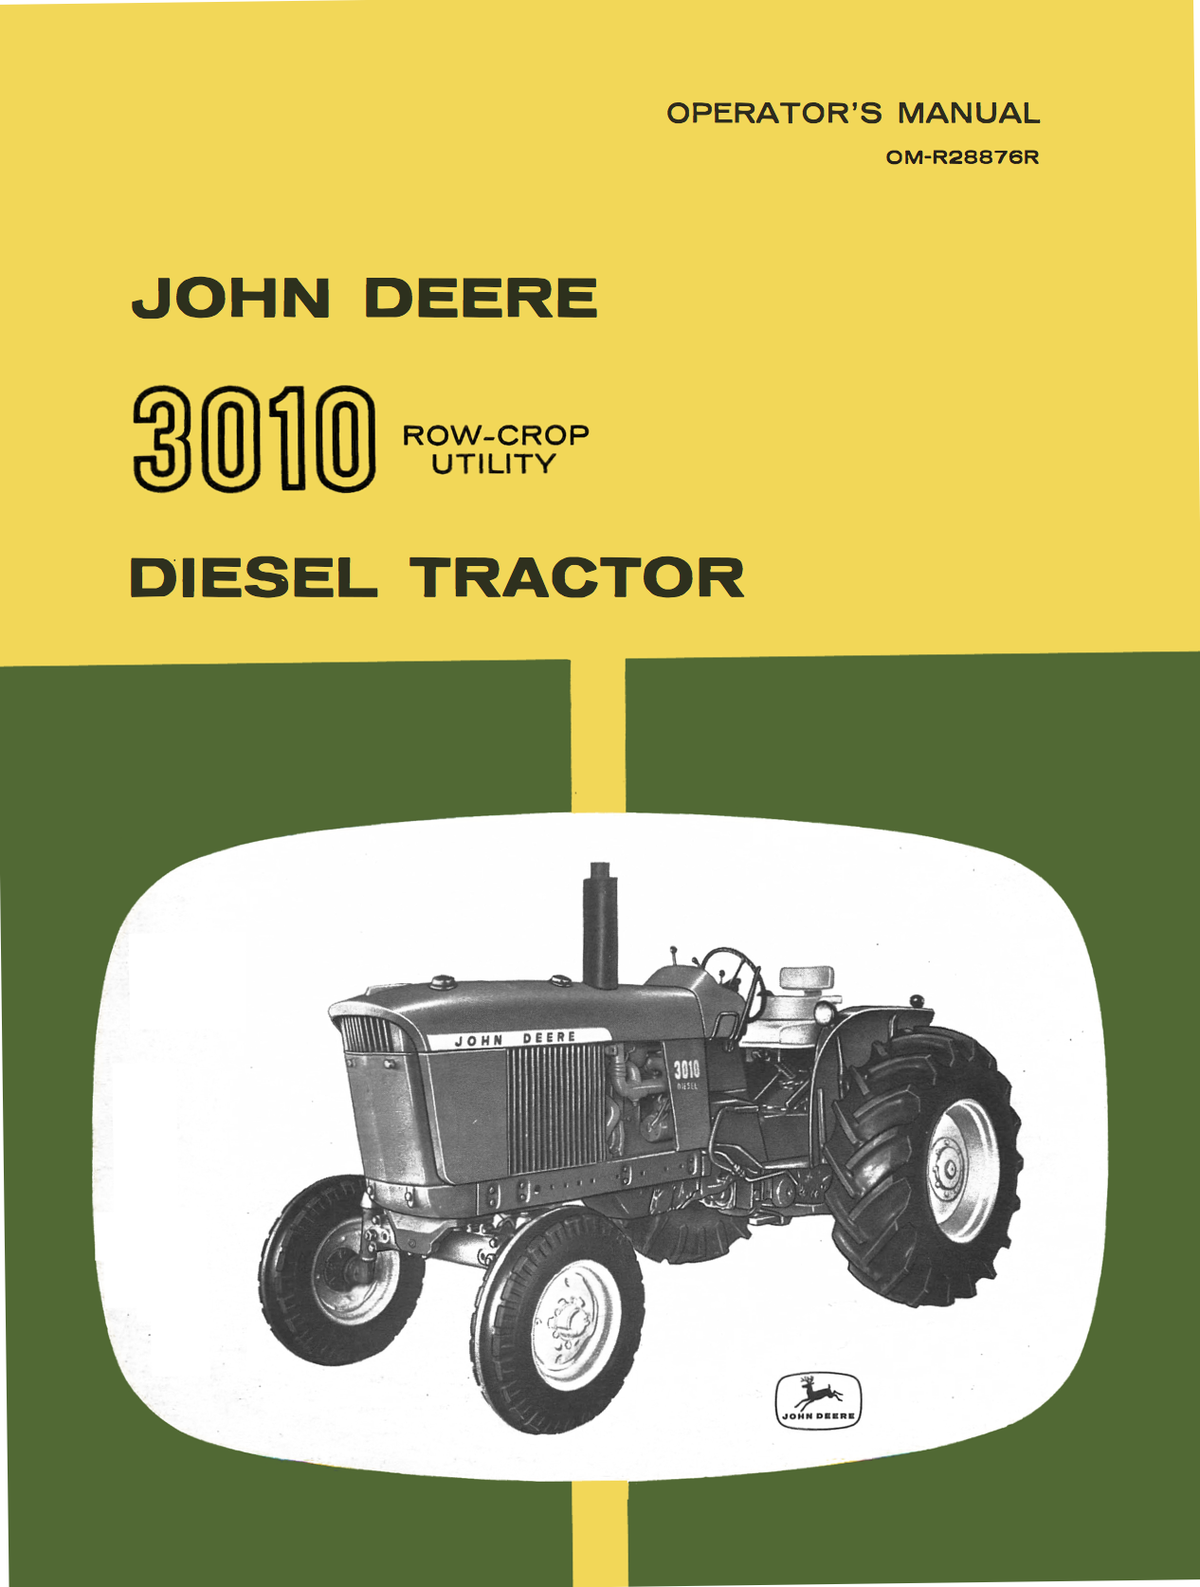 John Deere 3010 Row-Crop Utility Diesel Tractors - Operator's Manual - Ag Manuals - A Provider of Digital Farm Manuals - 1